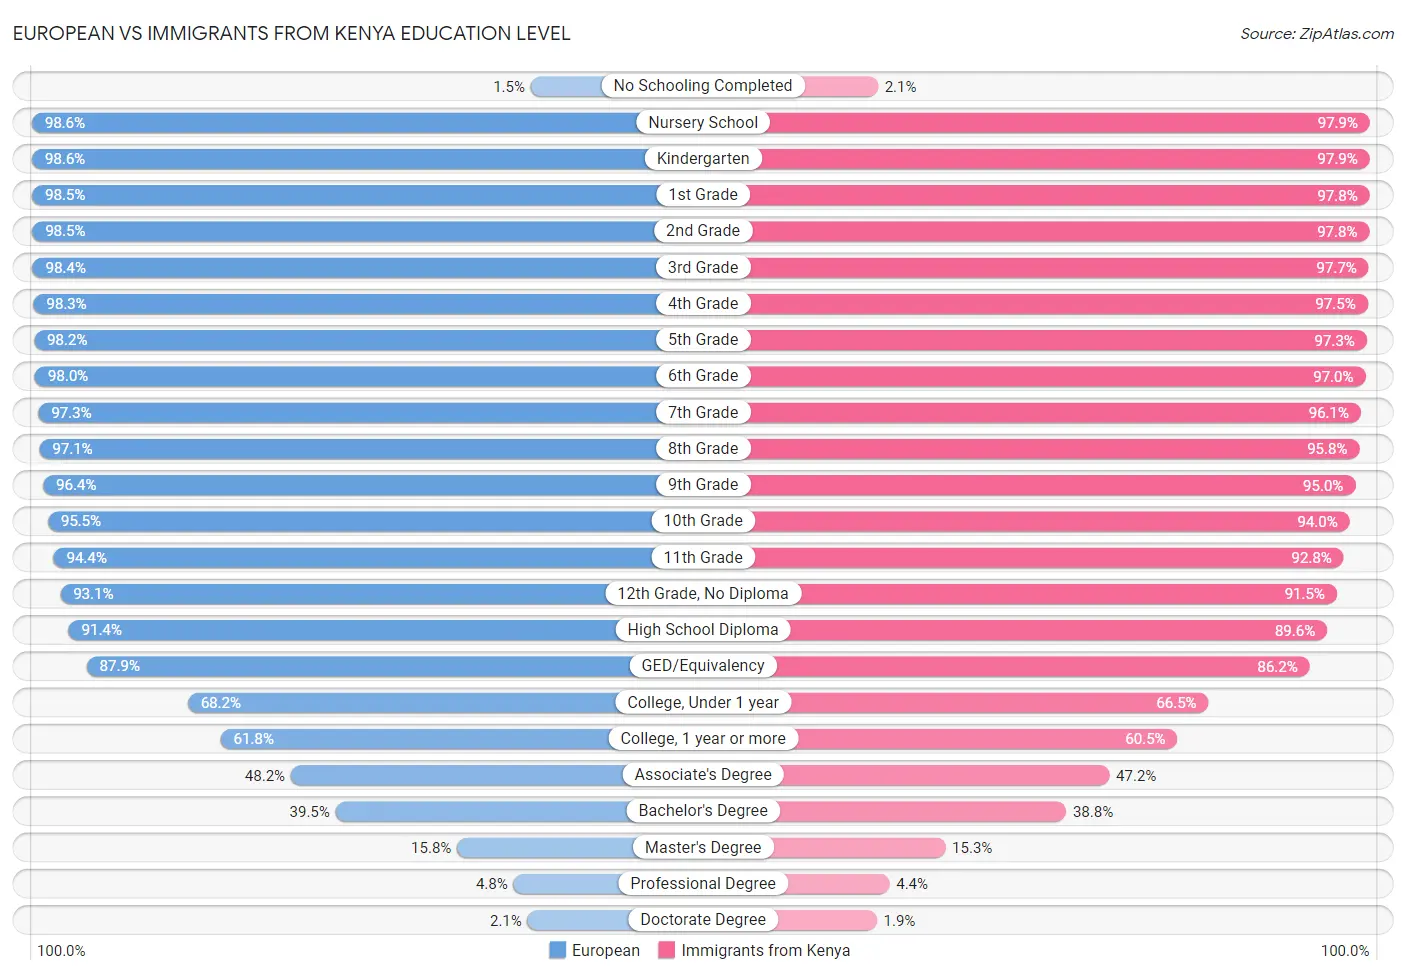 European vs Immigrants from Kenya Education Level